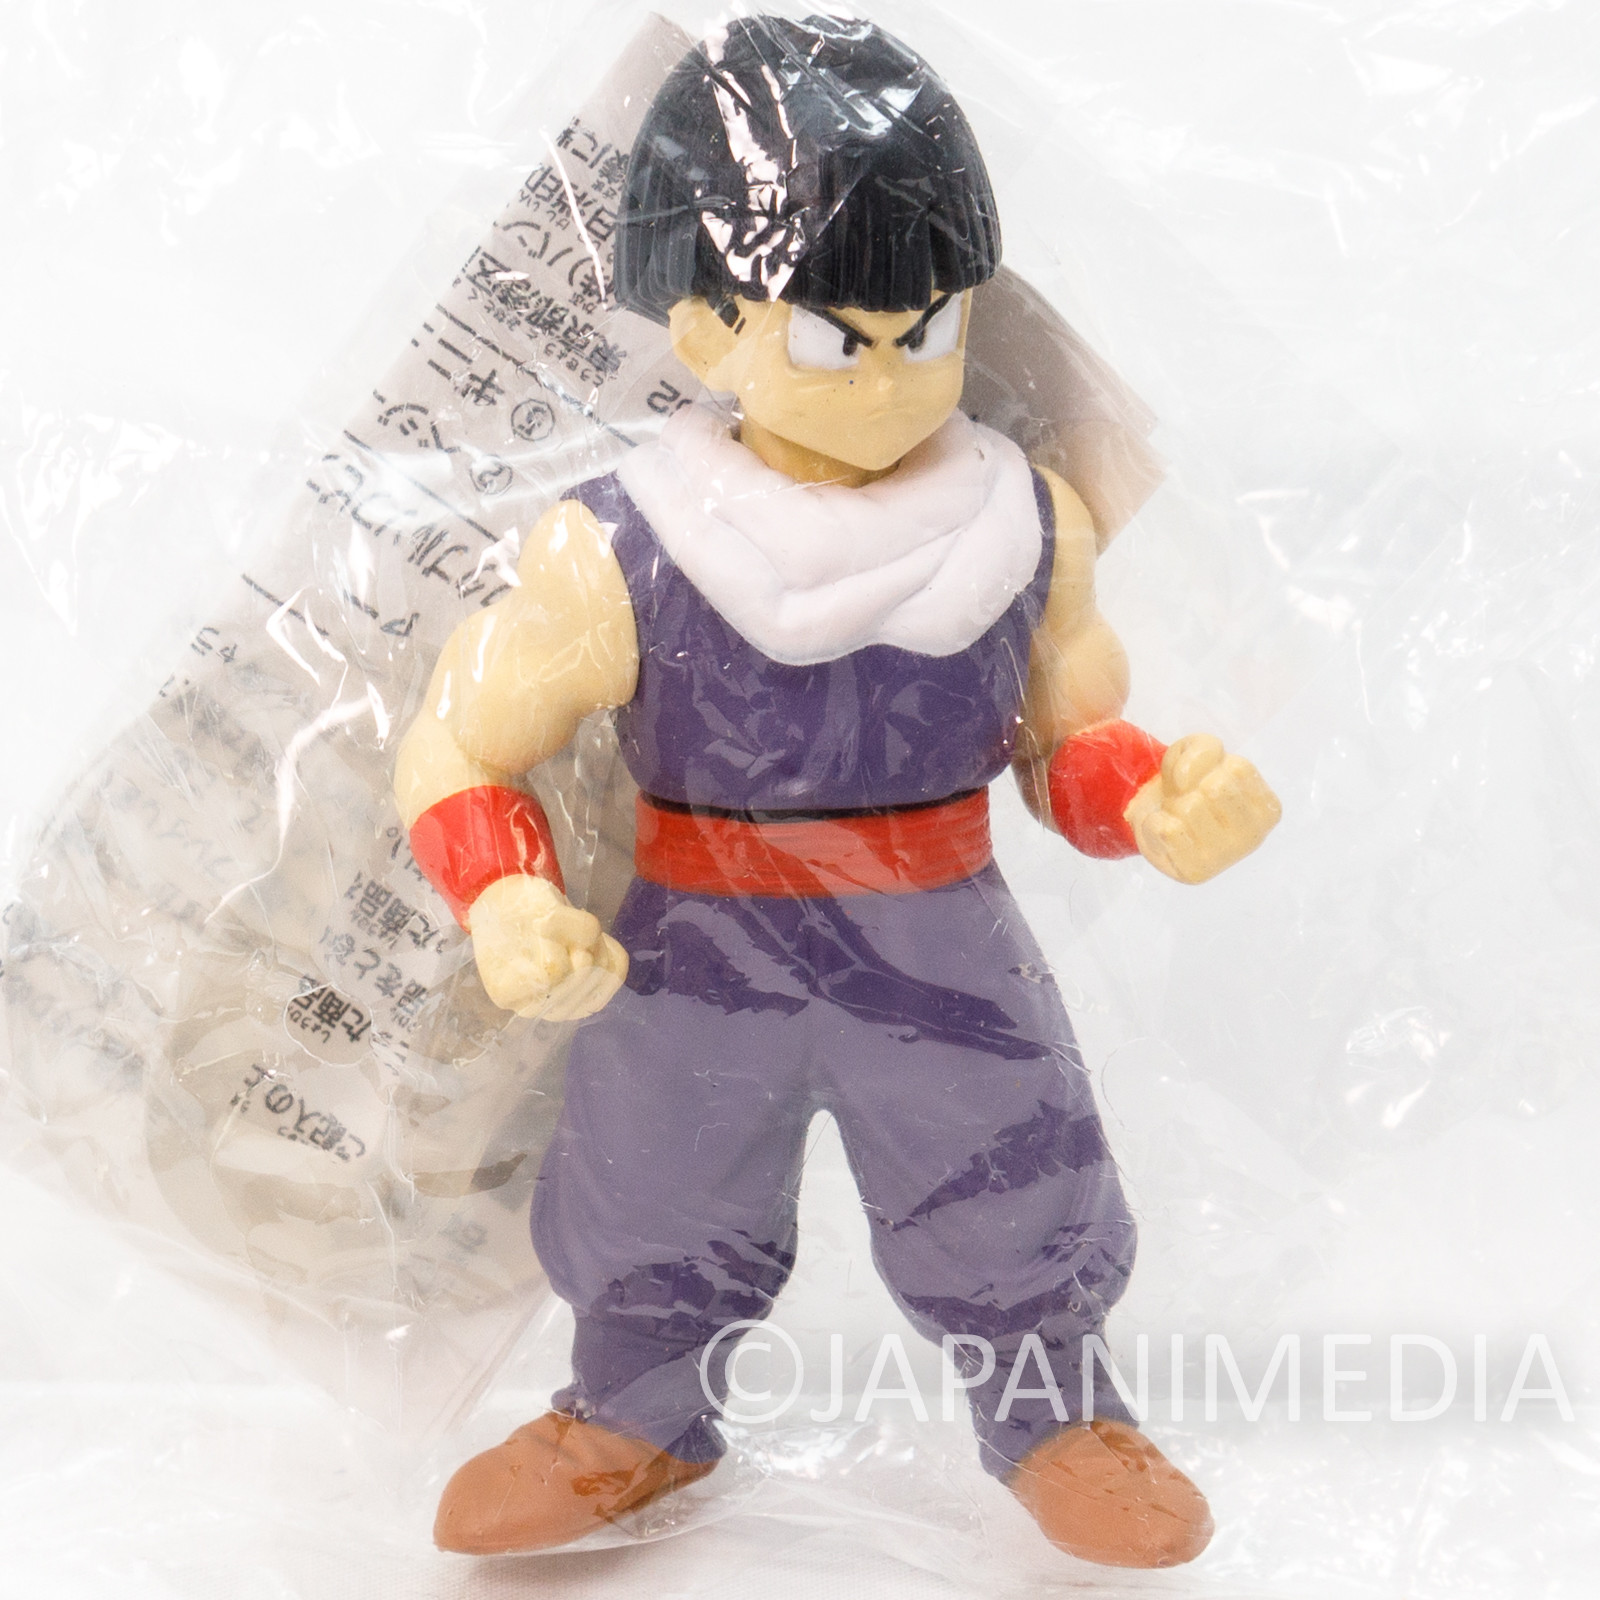 BANPRESTO WCF Dragon Ball version “KAMISAMA” JAPAN World Collectable Figure